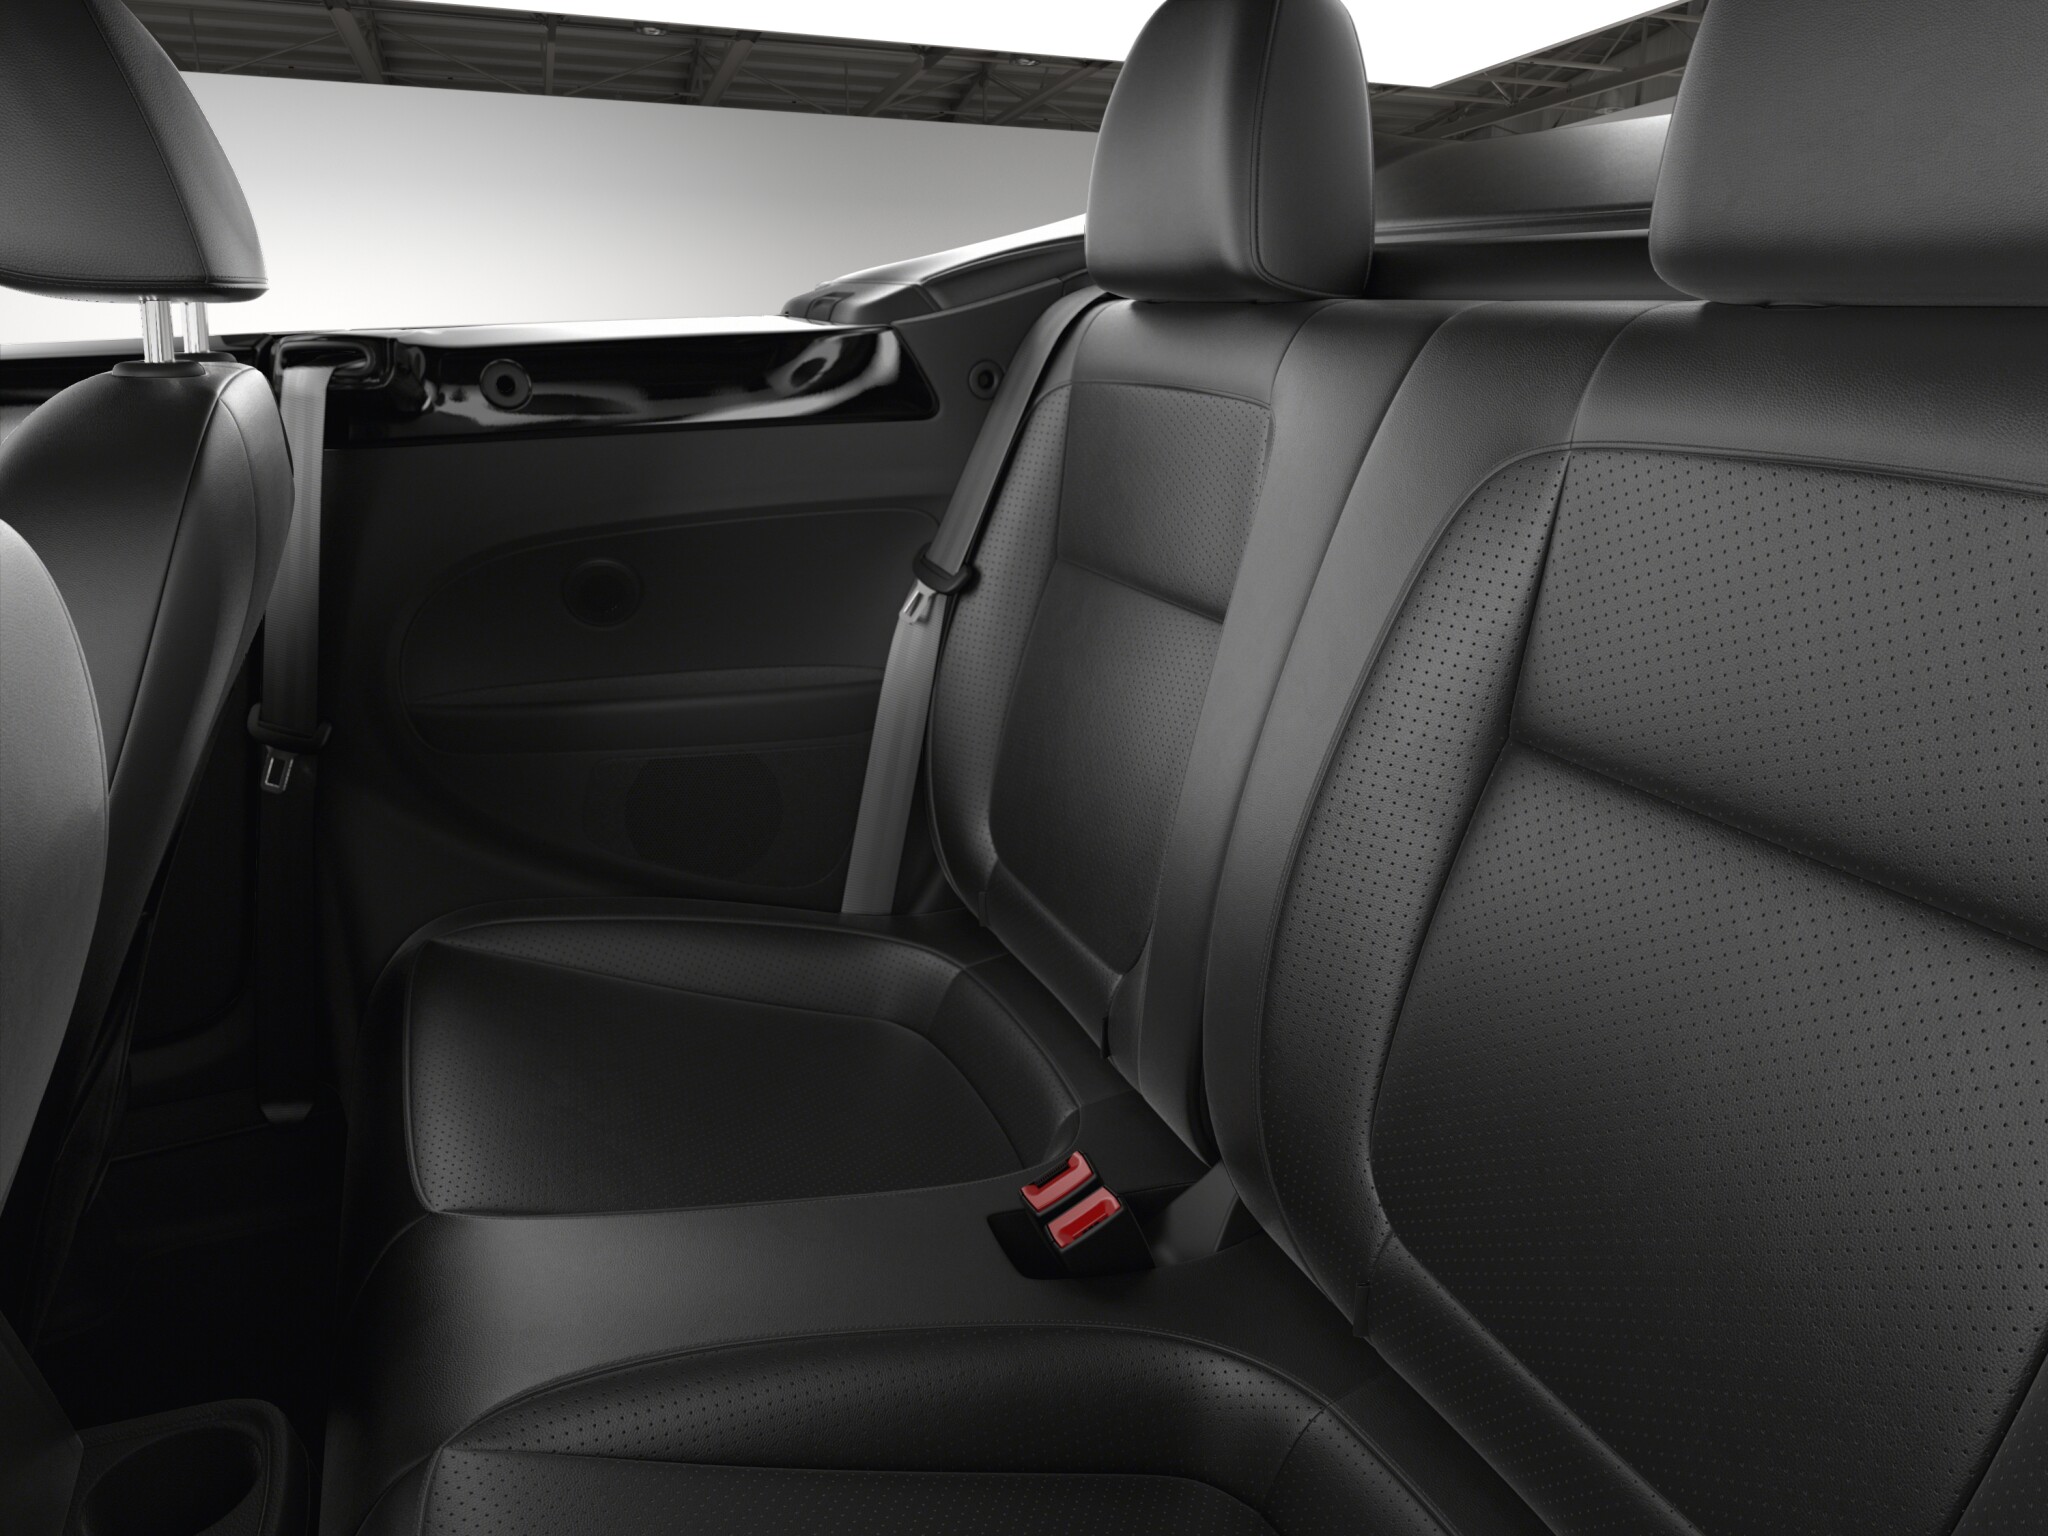 Volkswagen Beetle Convertinble 1.8T SE interior rear seat view